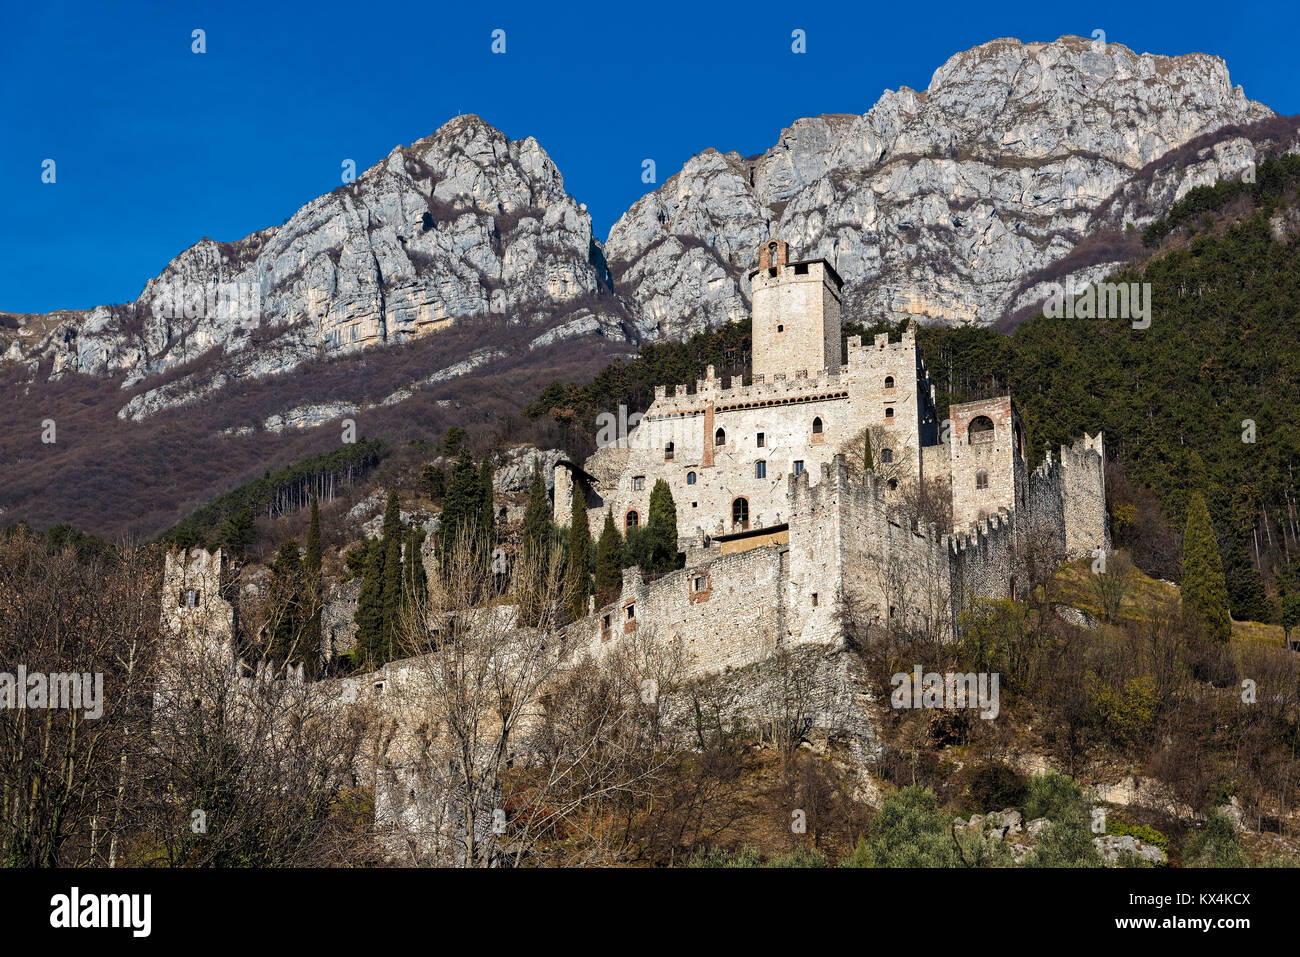 View of the Avio castle in Trentino, Italy Stock Photo